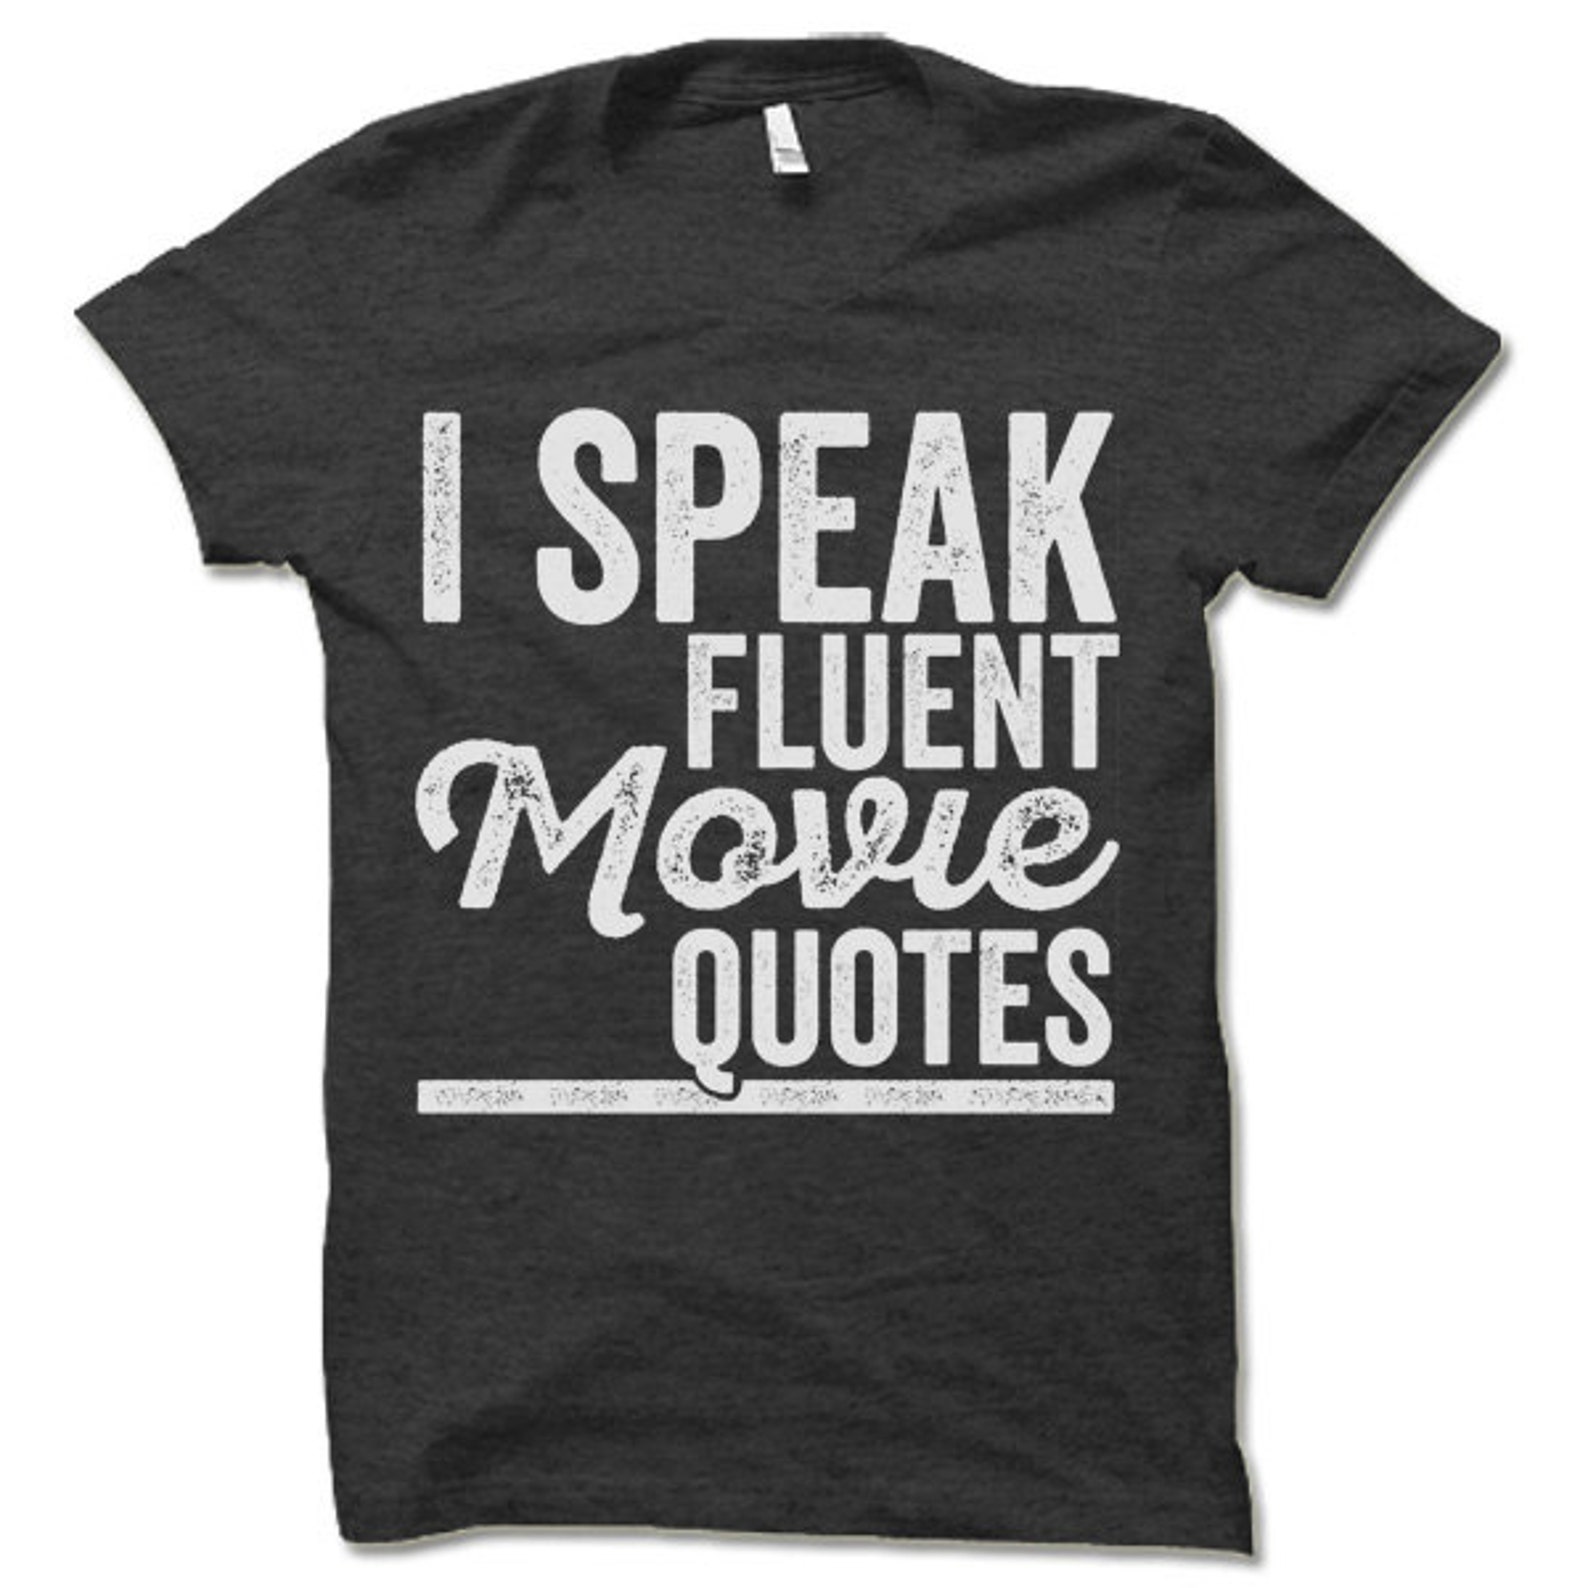 Speak fluent. I speak фото. Quotes on t-Shirts. Футболка унисекс АЛИЭКСПРЕСС. Песни i speak.